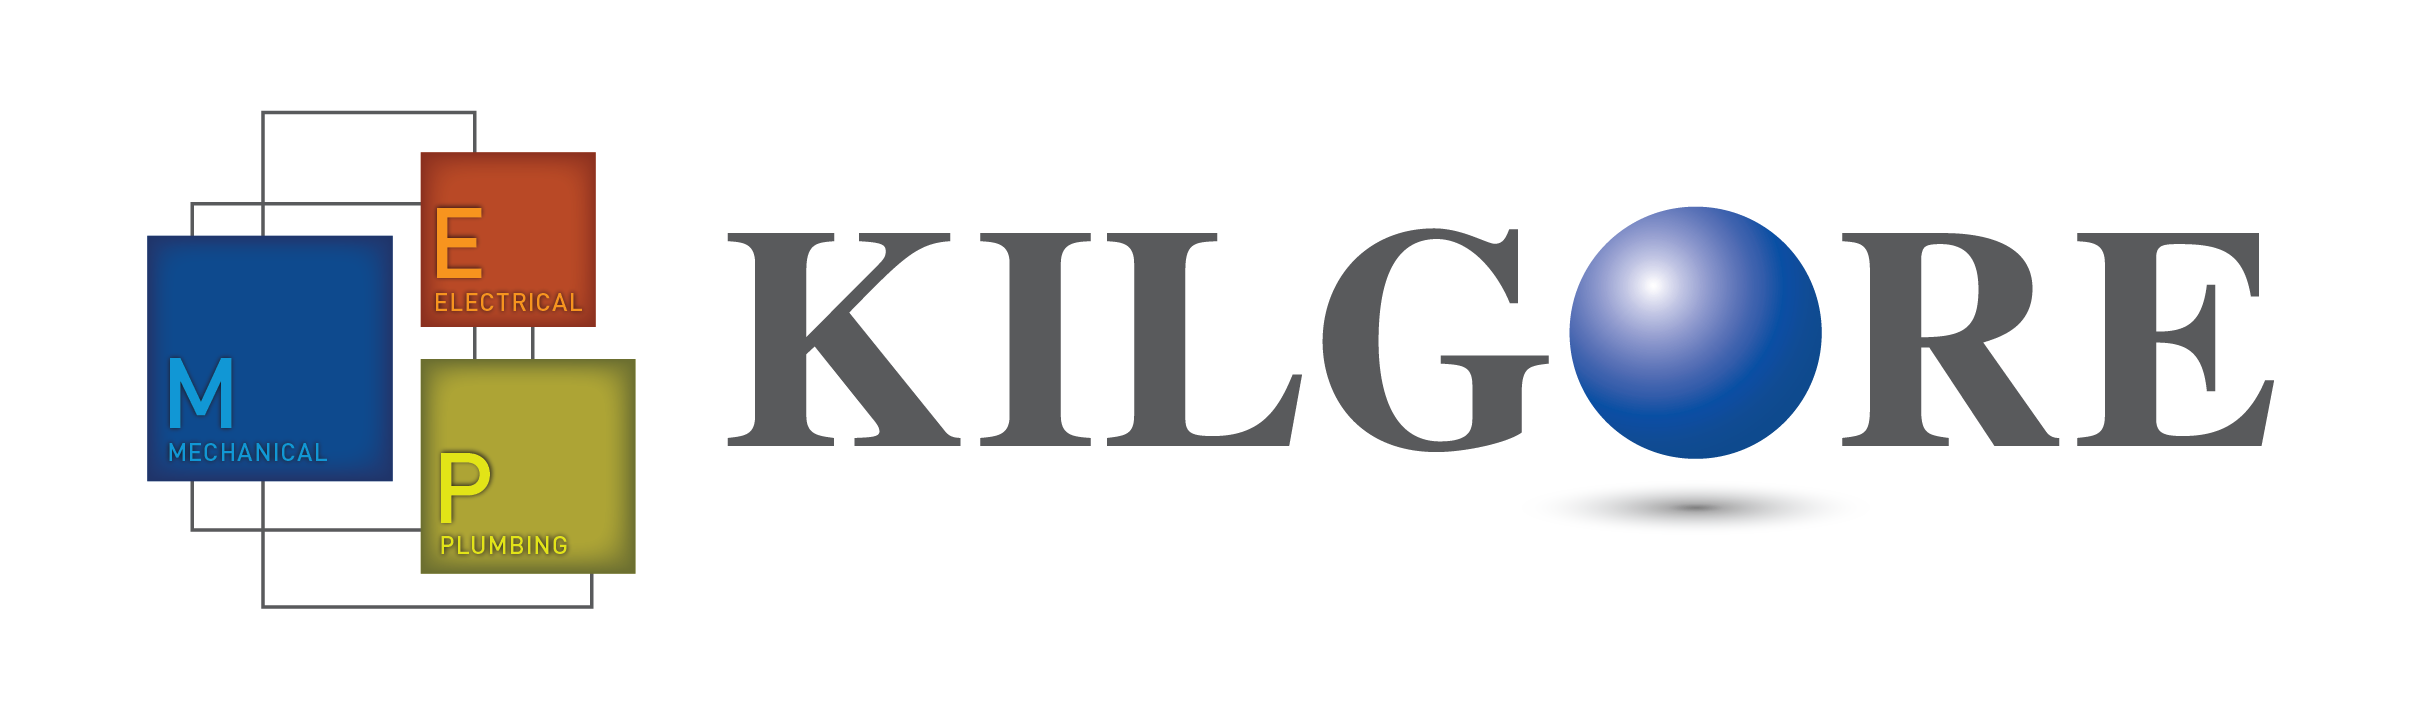 Kilgore Industries, LP logo